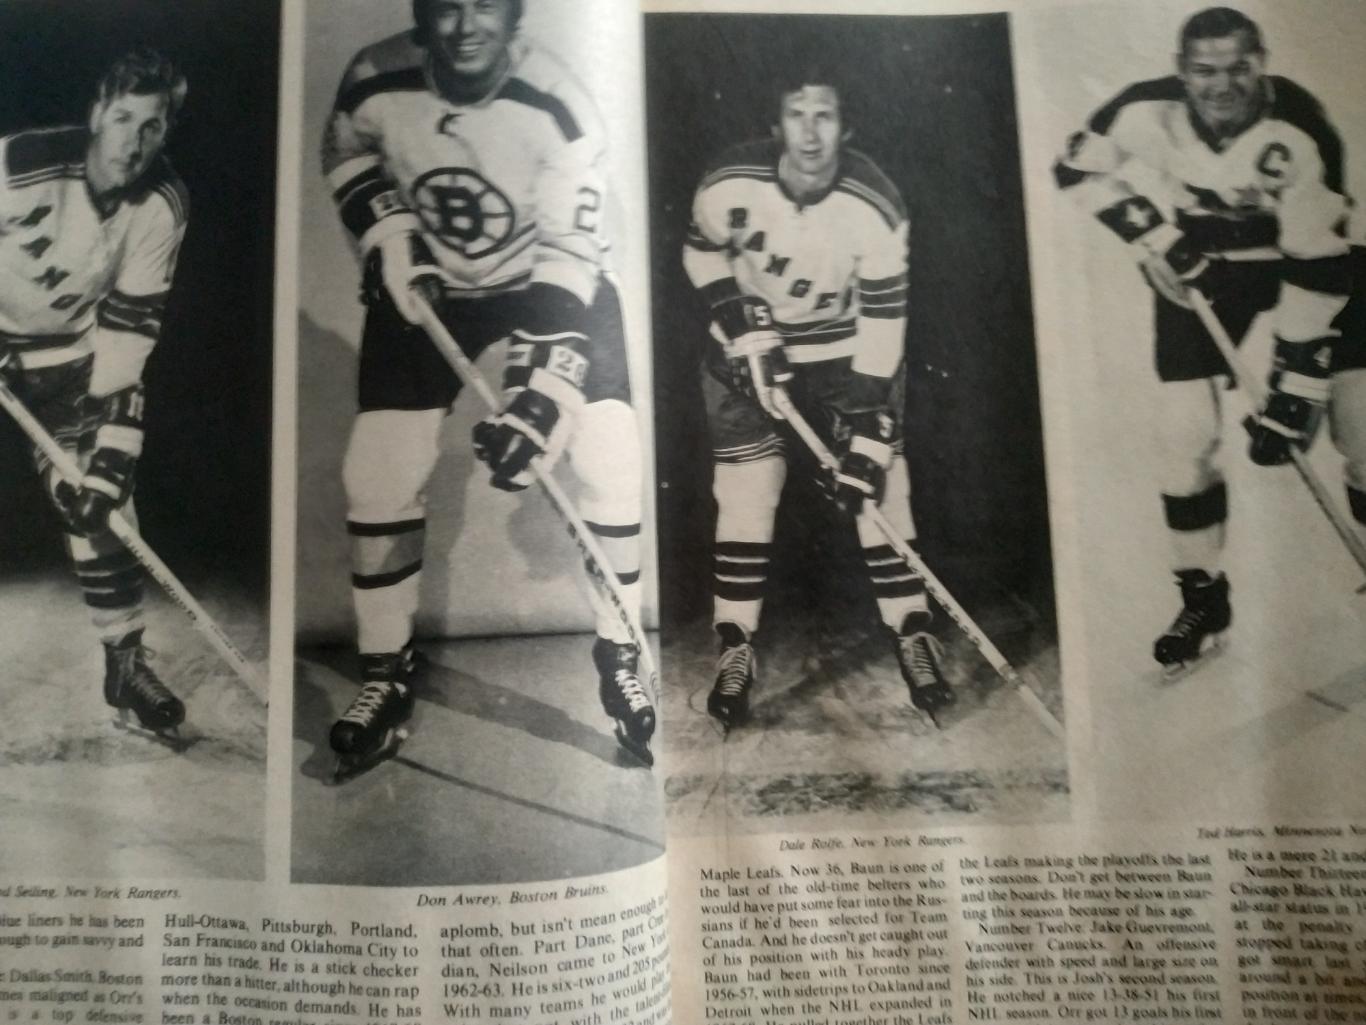 ЖУРНАЛ НХЛ СПОРТ СПЕШИАЛ ХОККЕЙ FEB 1973 NHL SPORTS SPECIAL HOCKEY 3